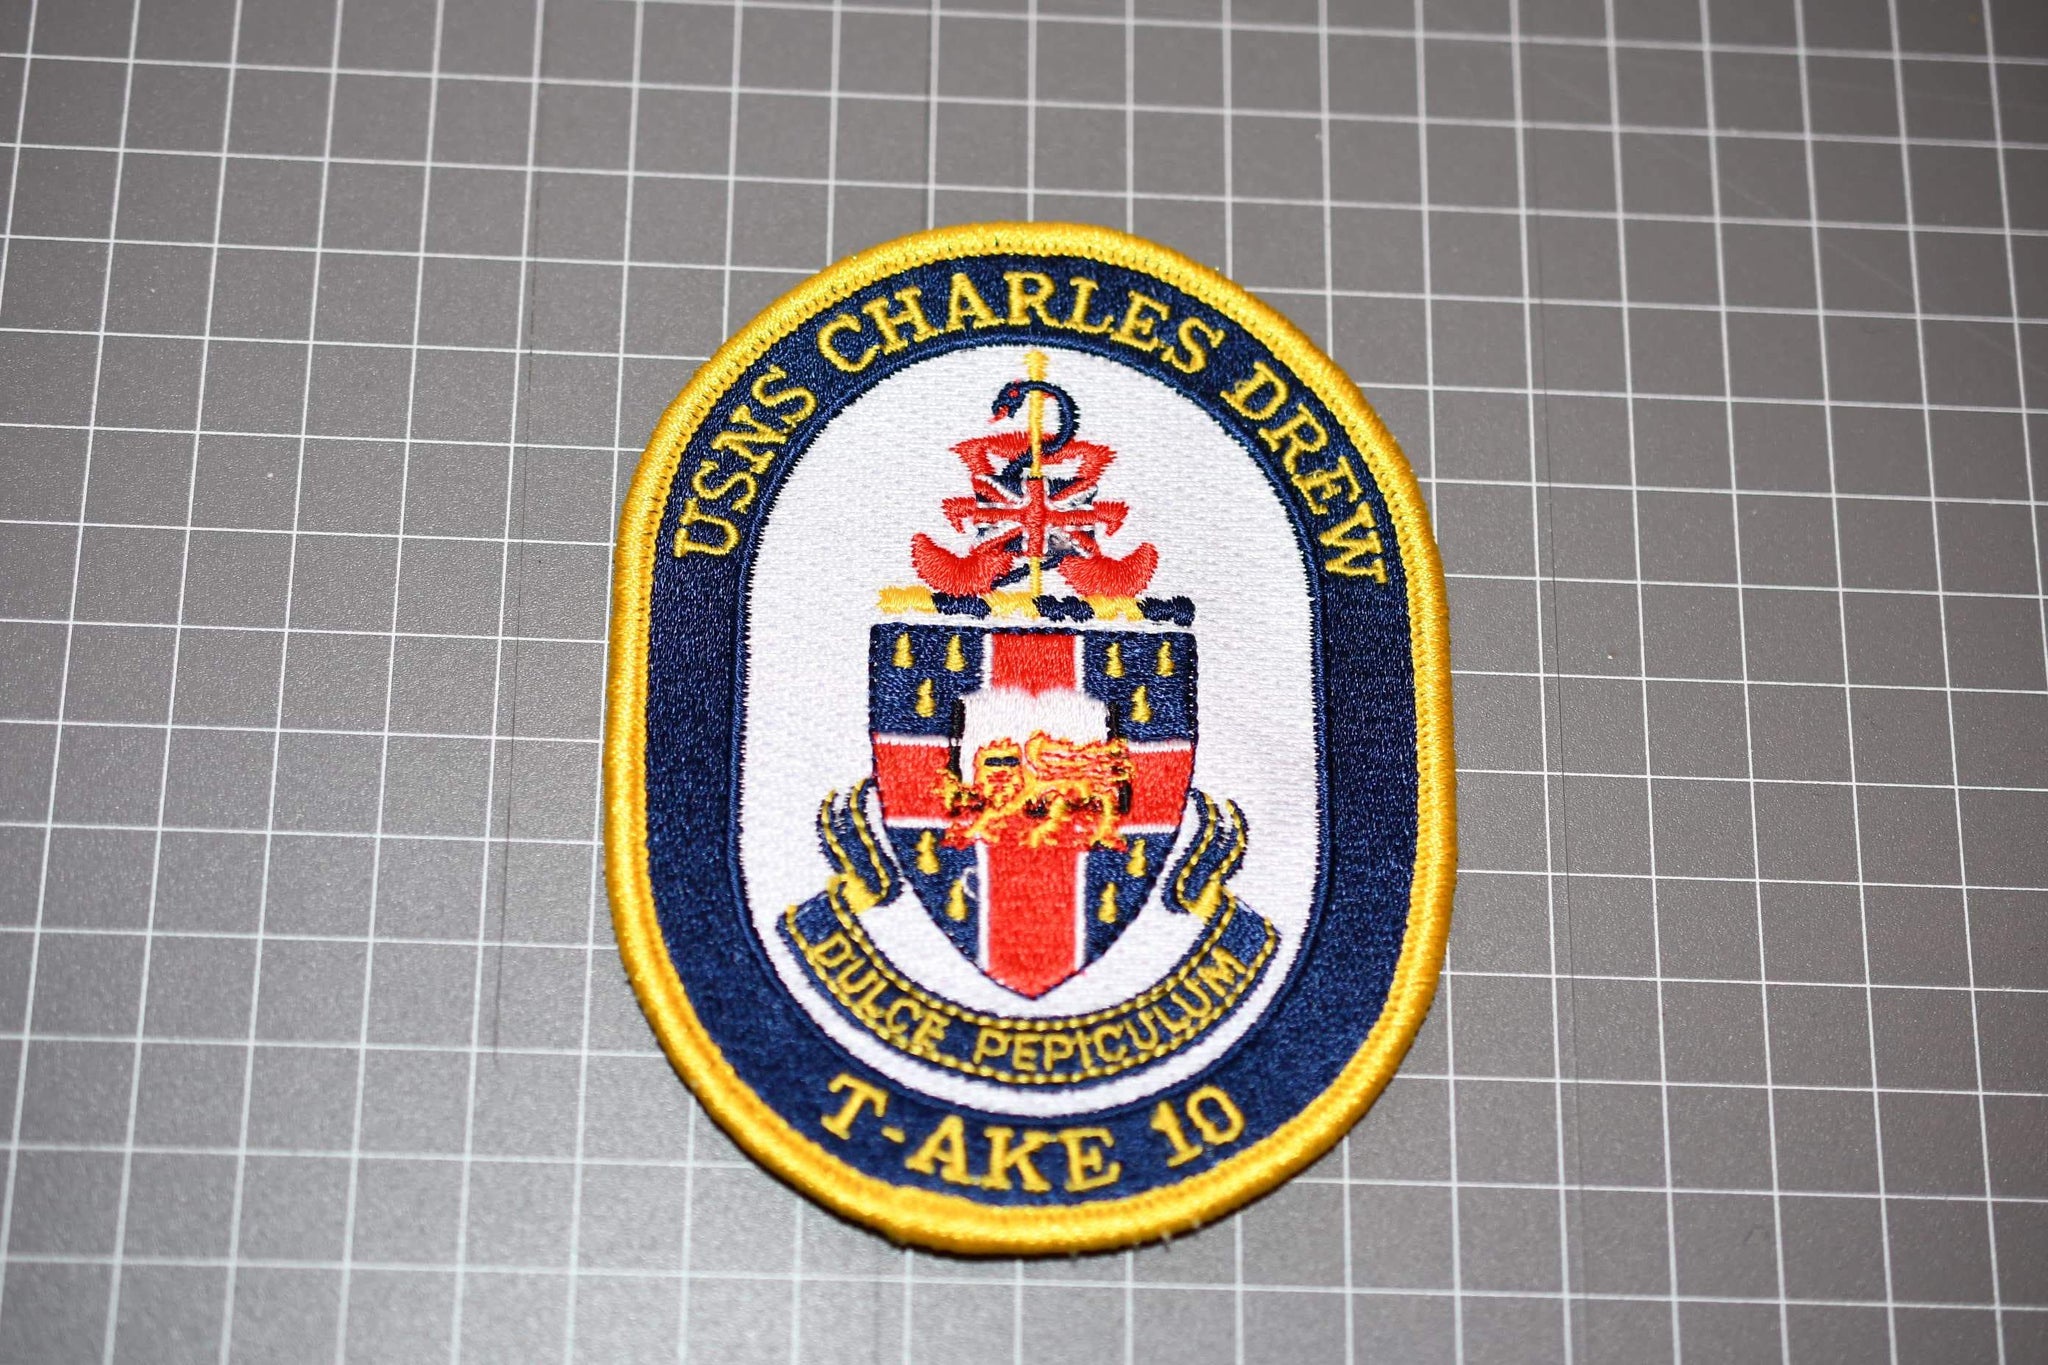 United States Navy USS Charles Drew T-AKE 10 Patch (B3)